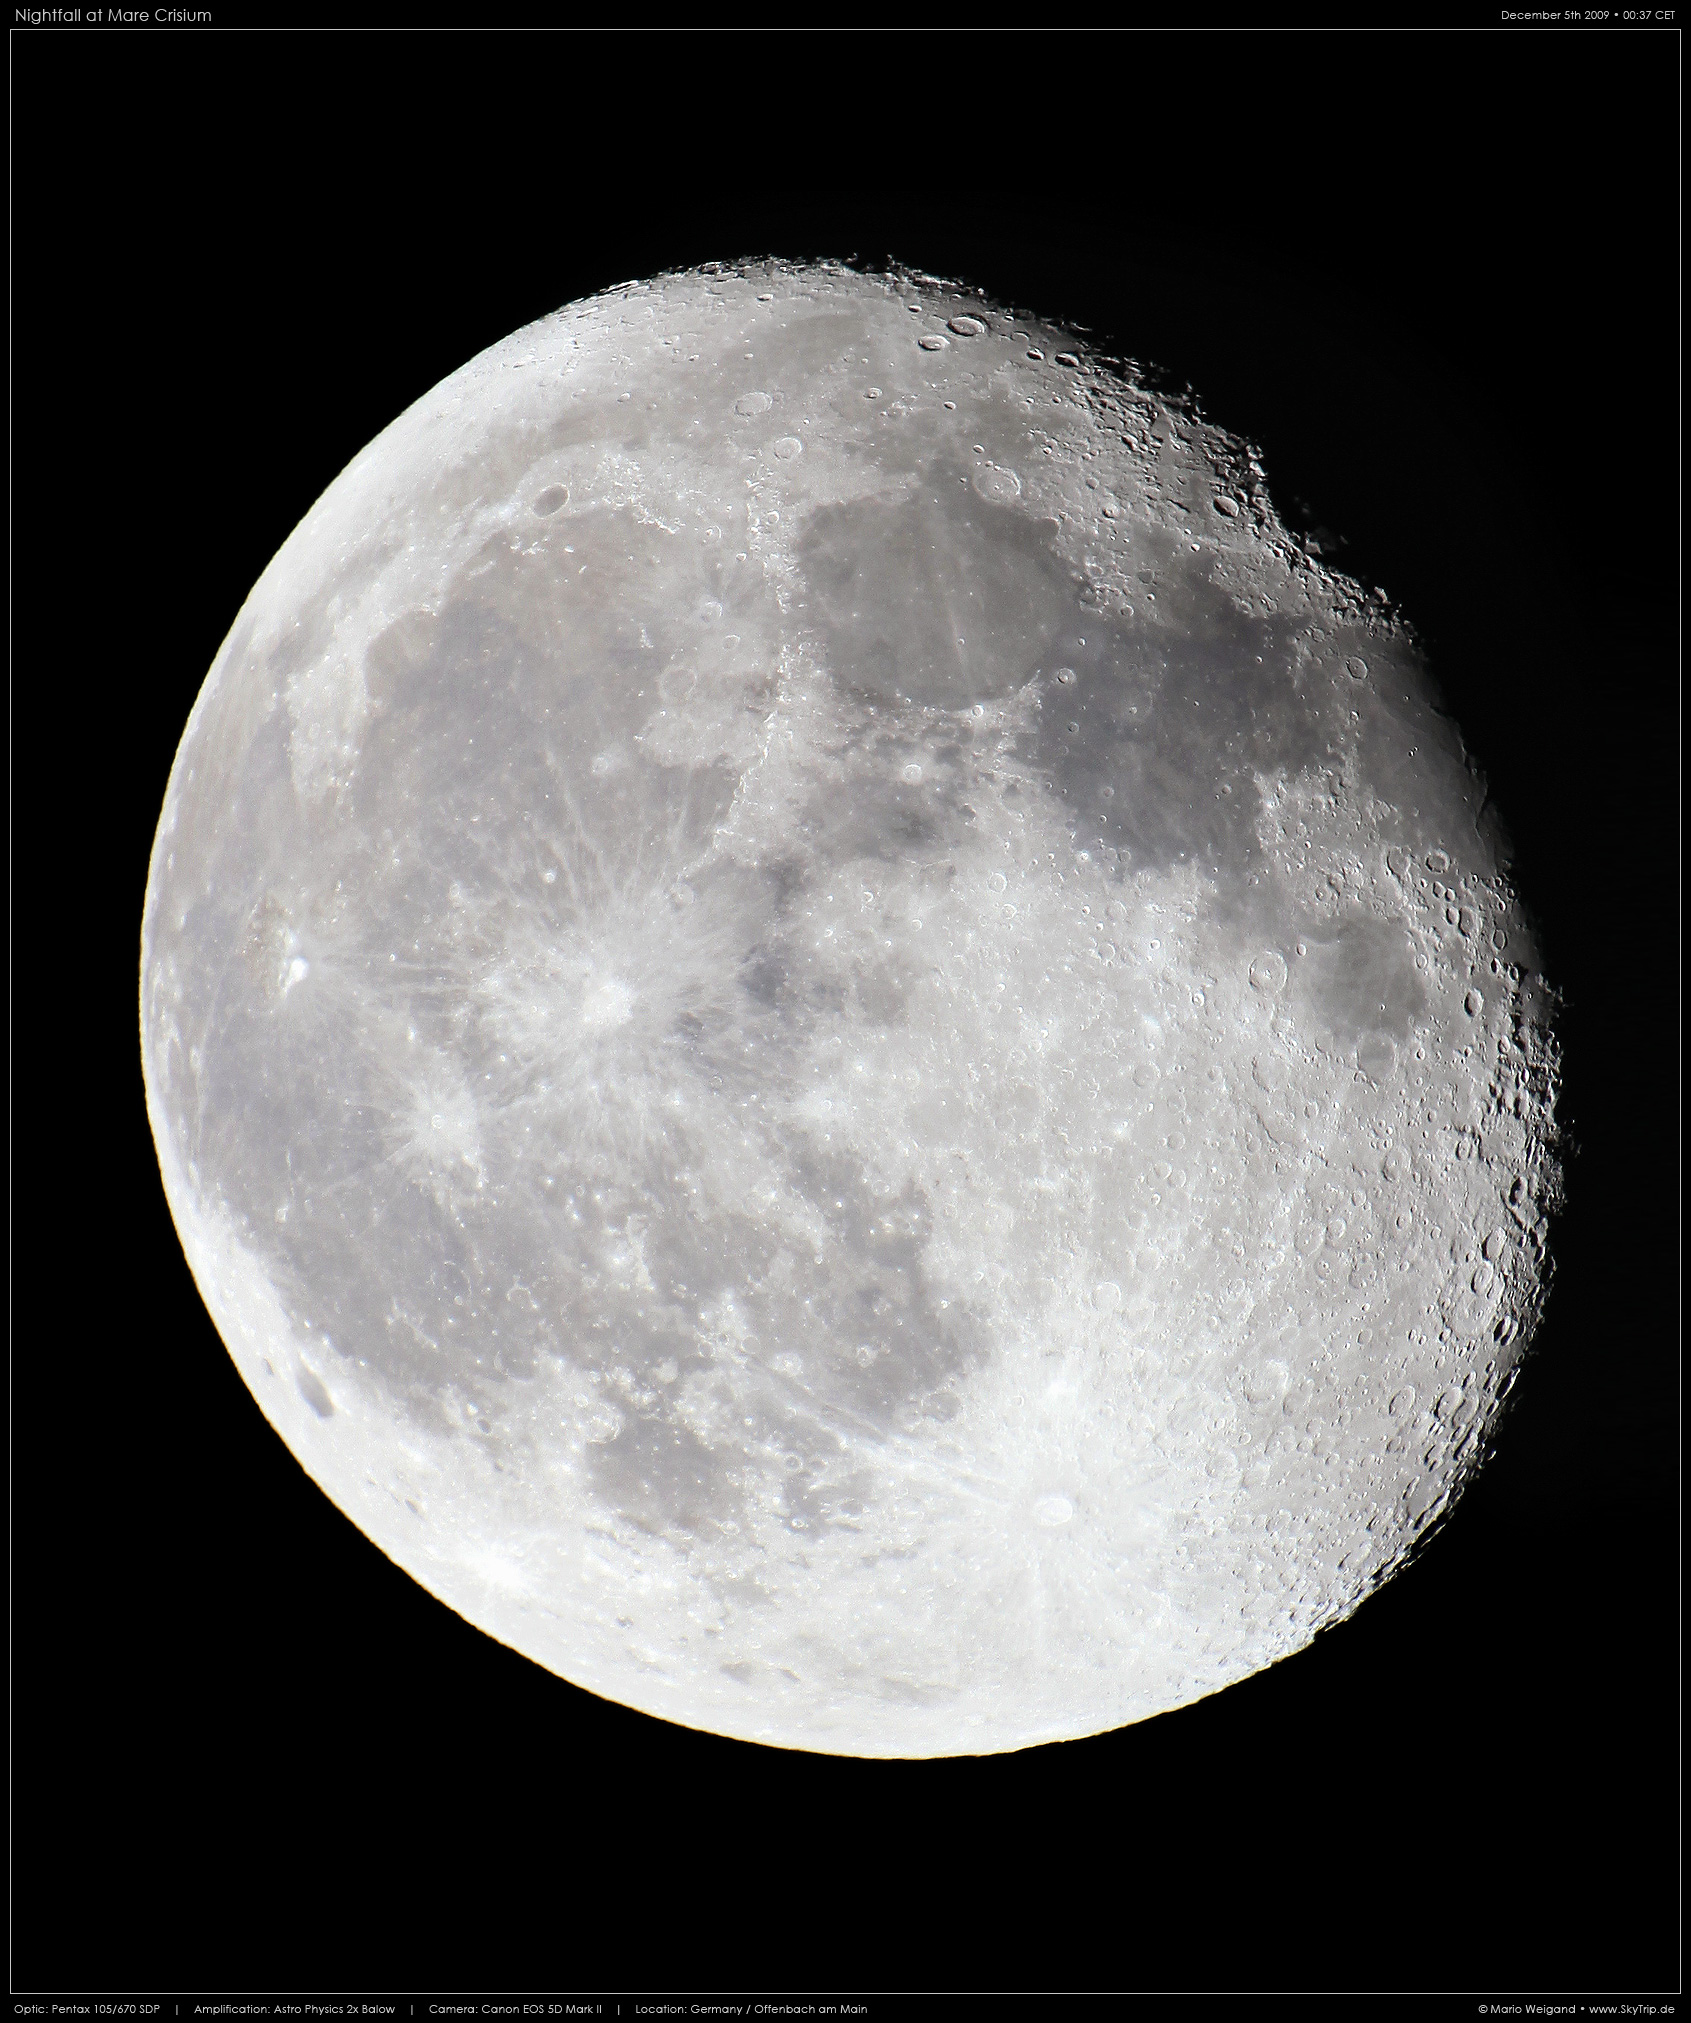 Moon: Nightfall at Mare Crisium